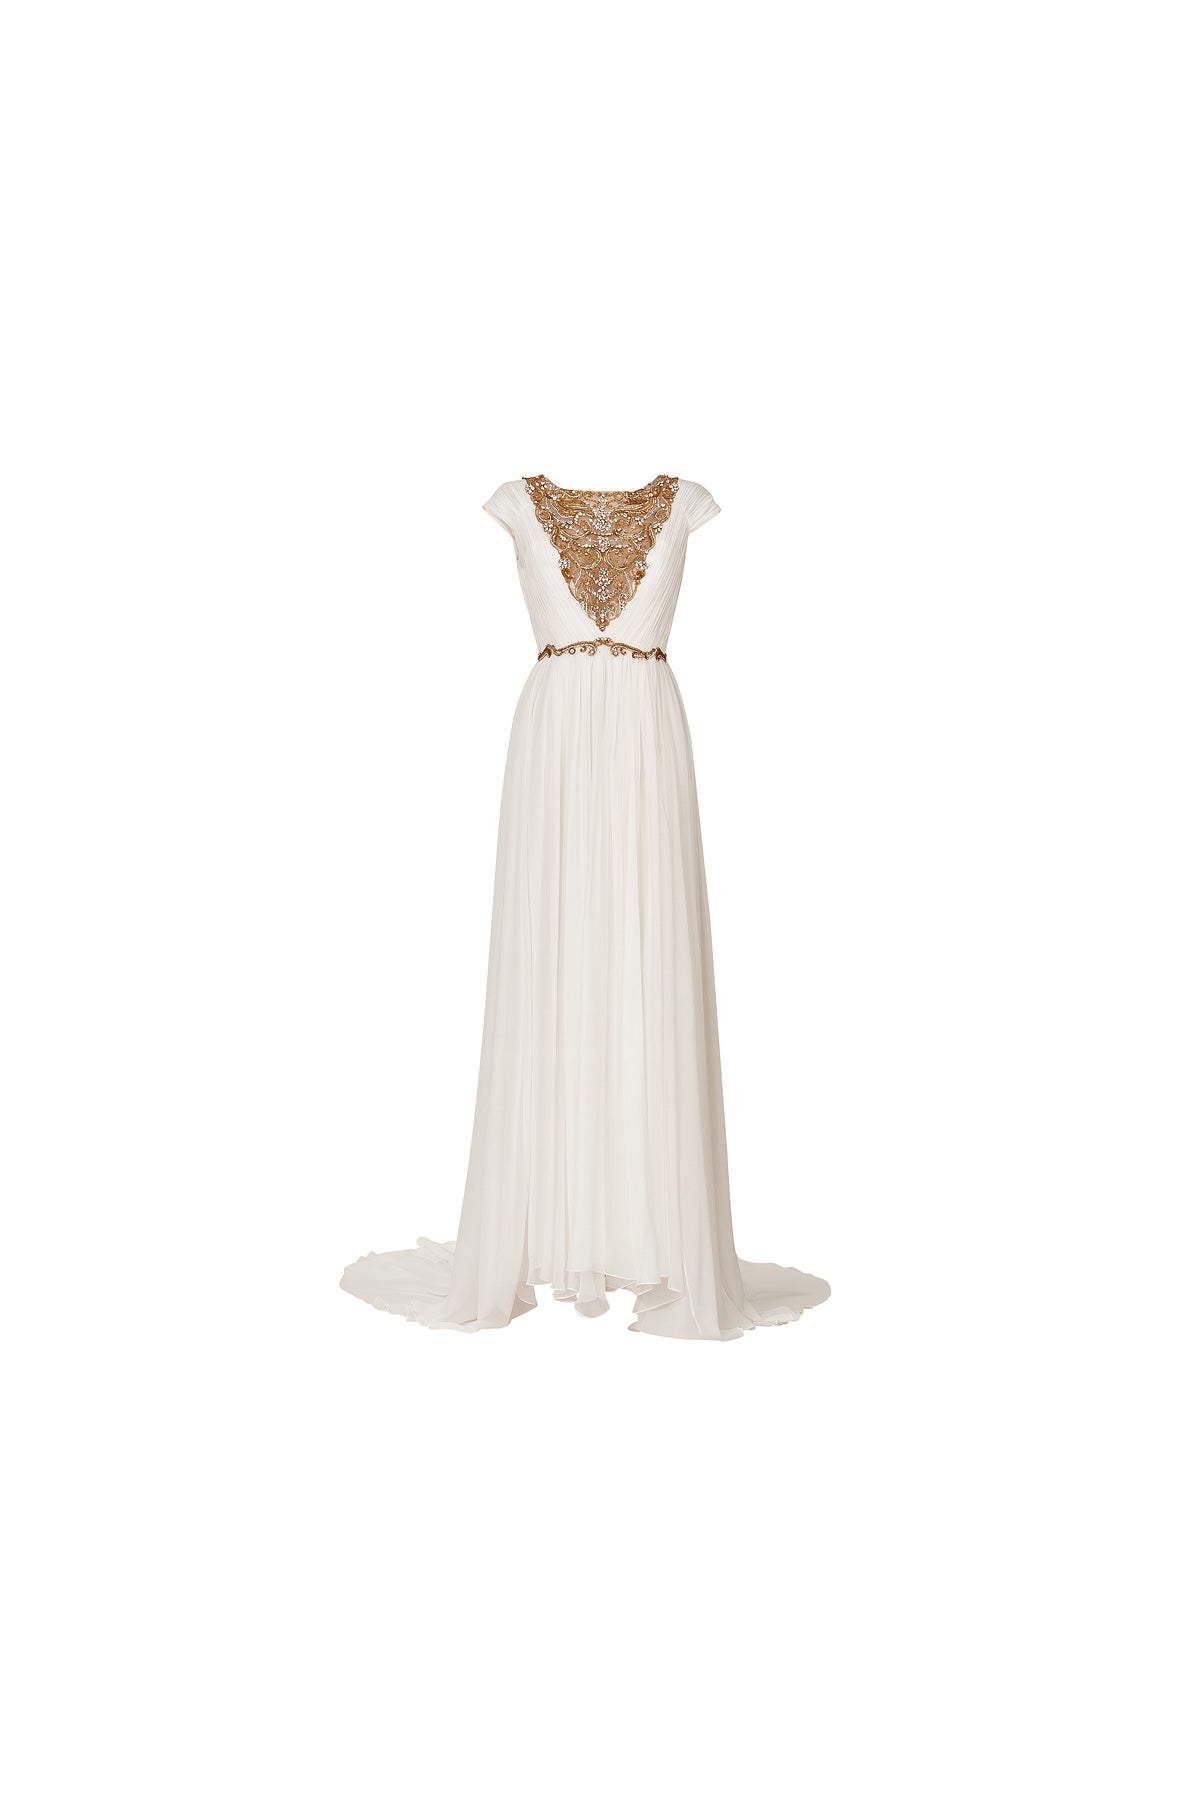 Best Retro Wedding Dresses For Solange
